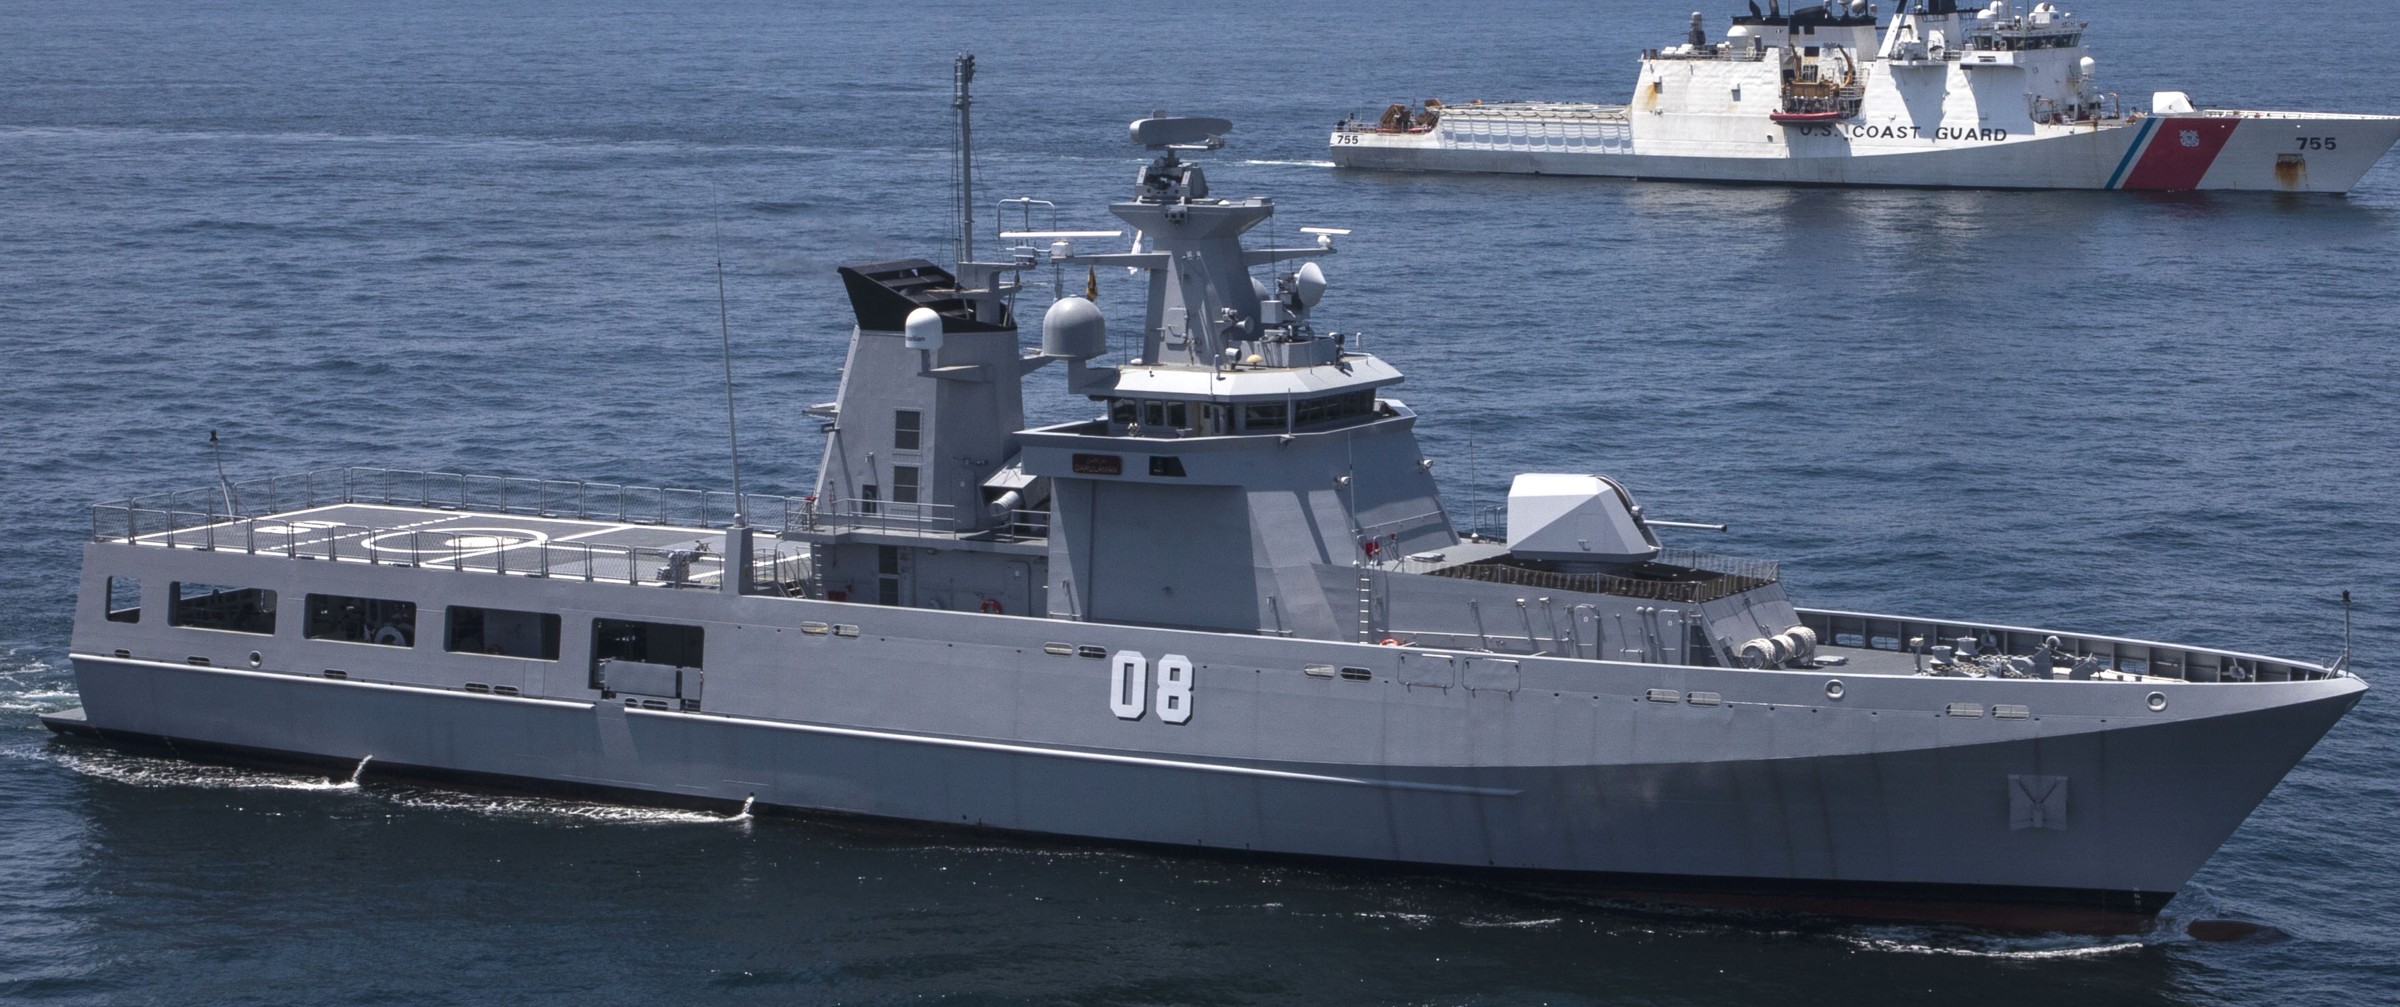 opv 08 kdb darulaman offshore patrol vessel darussalem class royal brunei navy 08